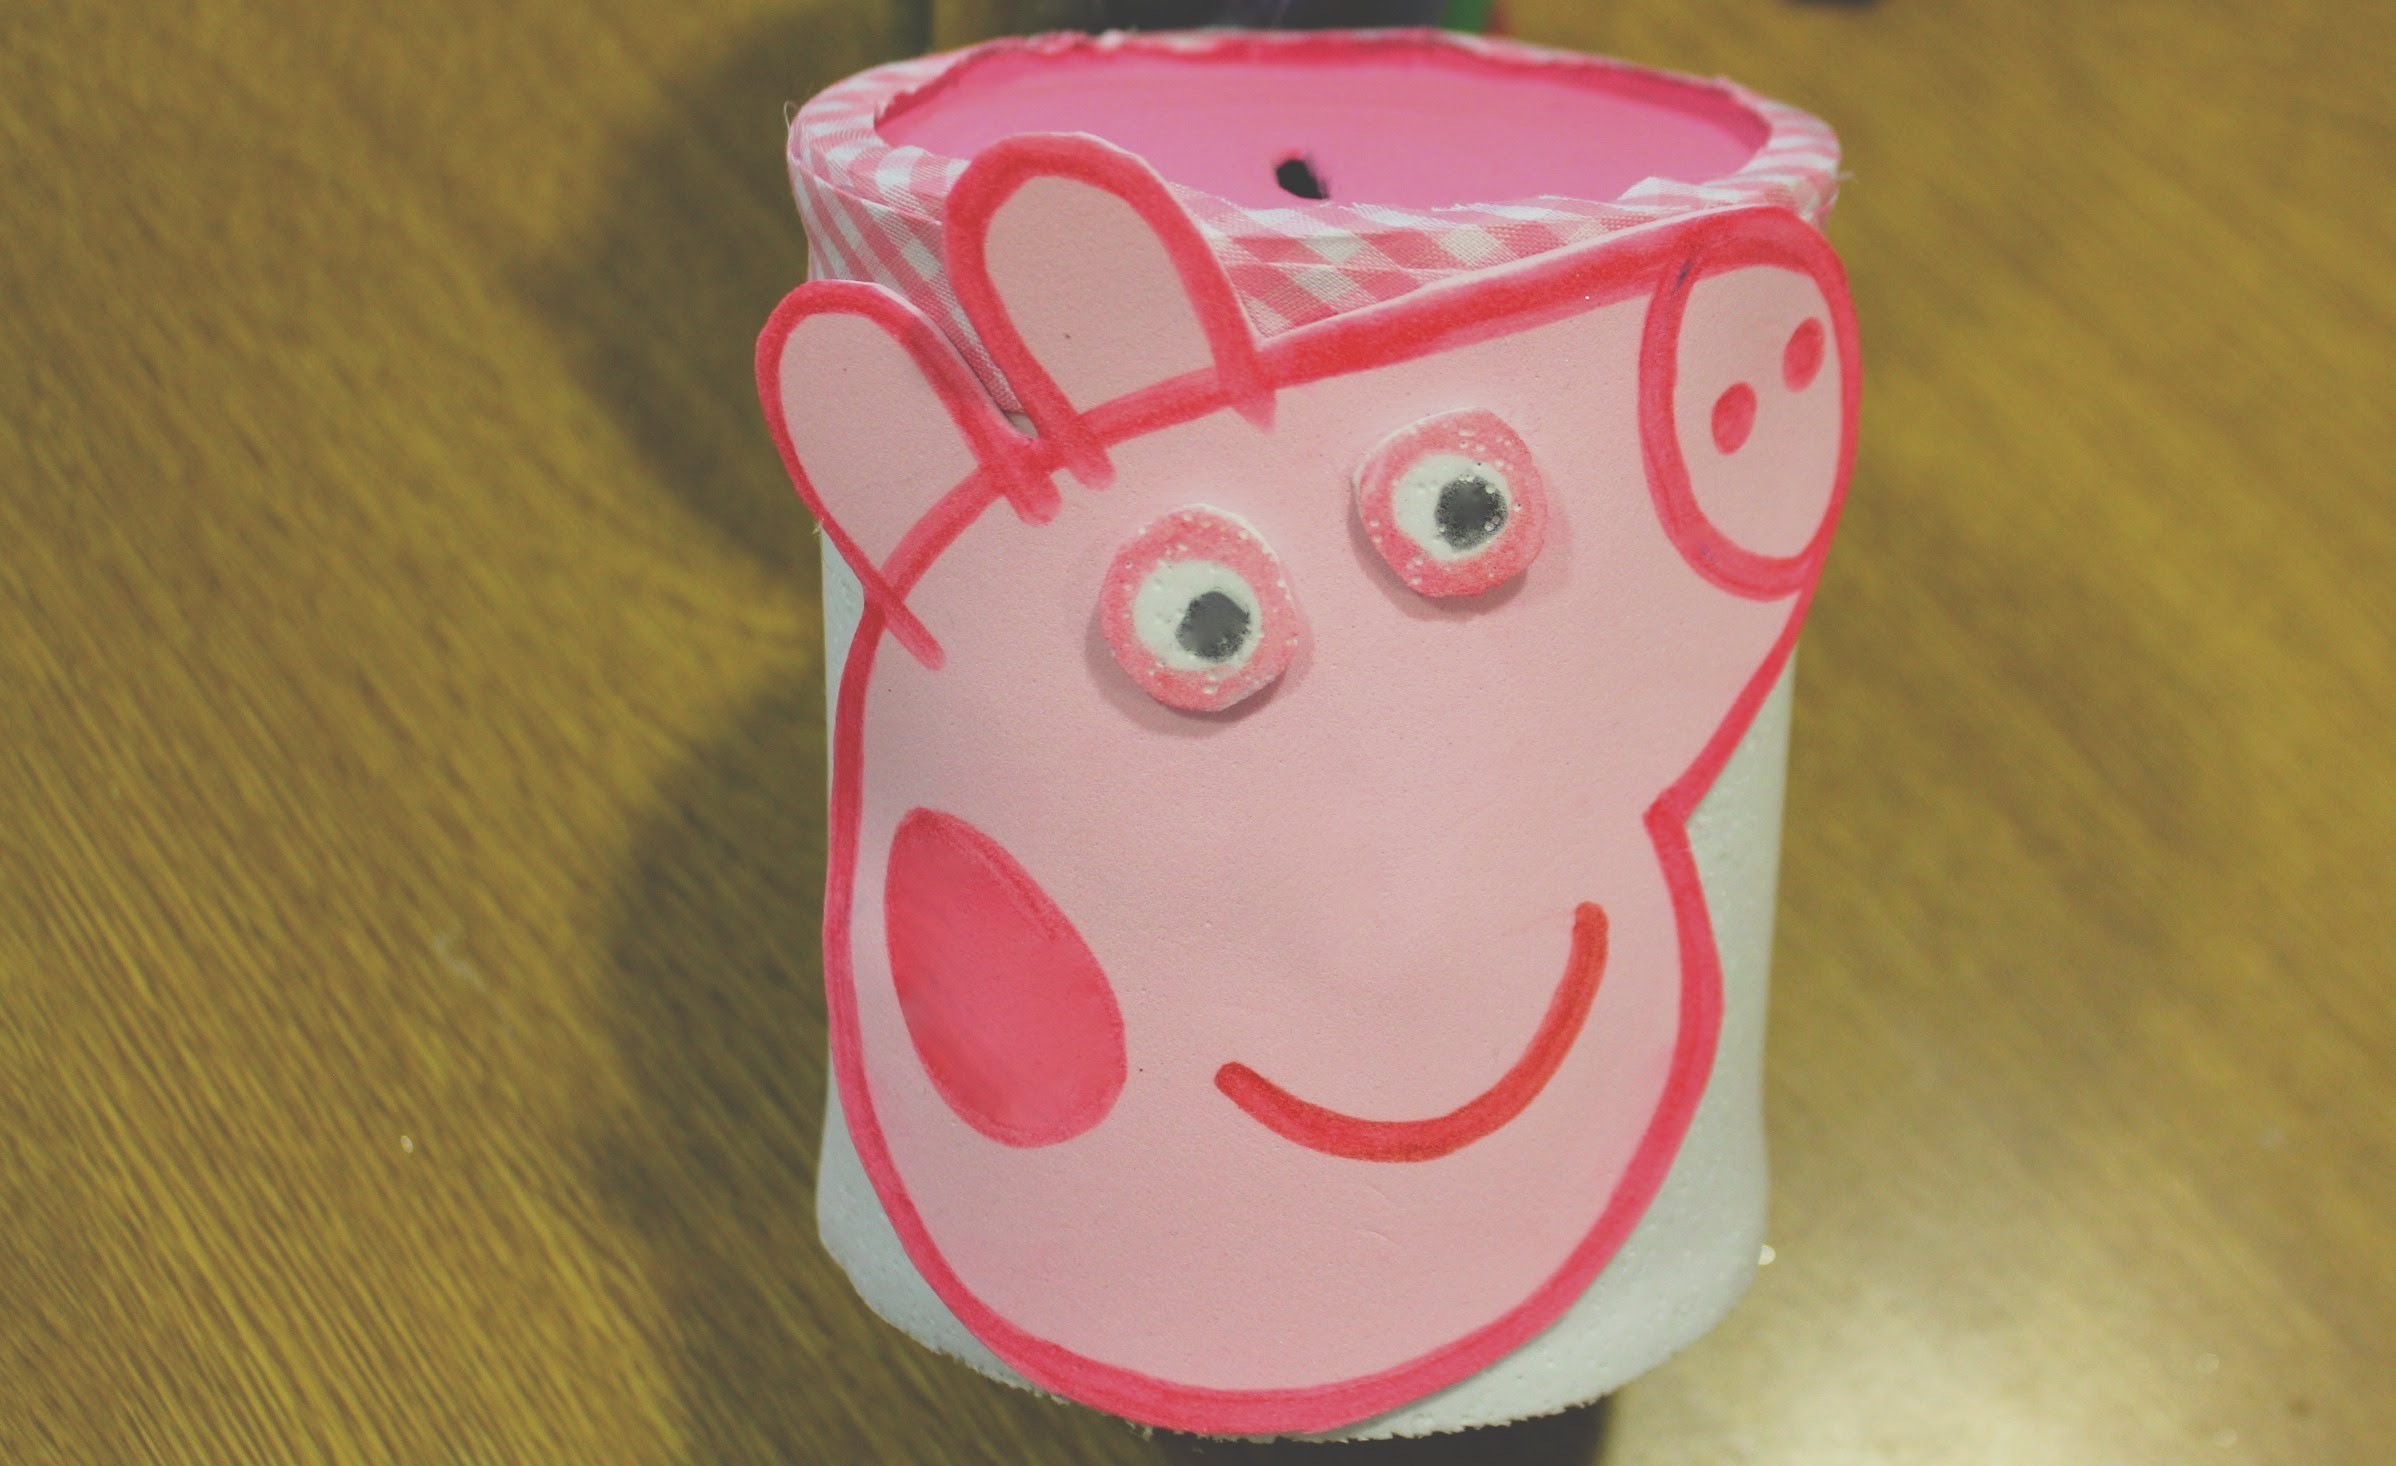 Reciclaje : Hucha de Peppa pig con una lata